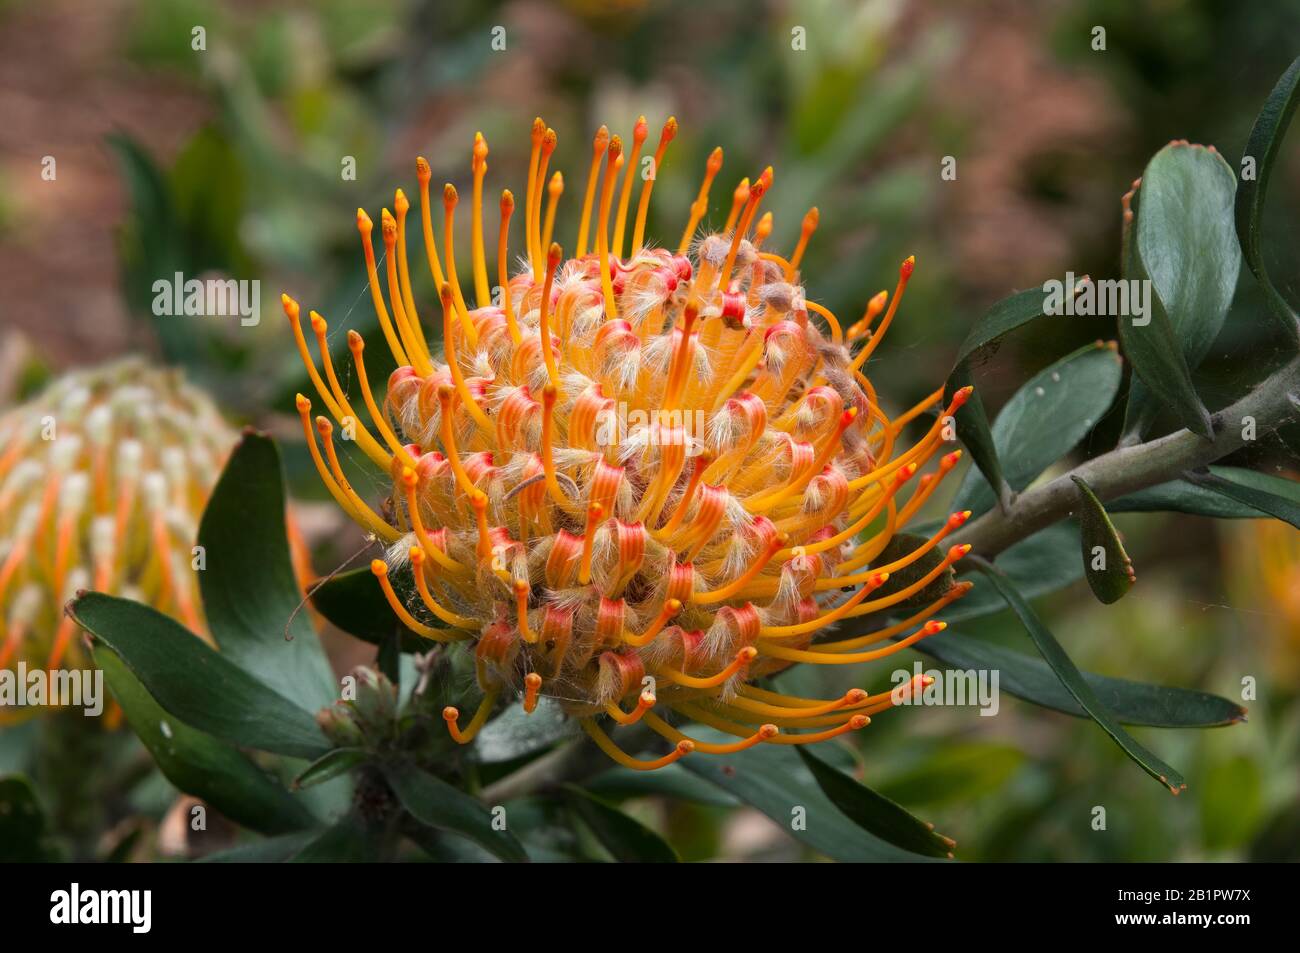 Sydney Australia, flower head of a leucospermum conocarpodendron shrub native to Cape Town, South Africa Stock Photo